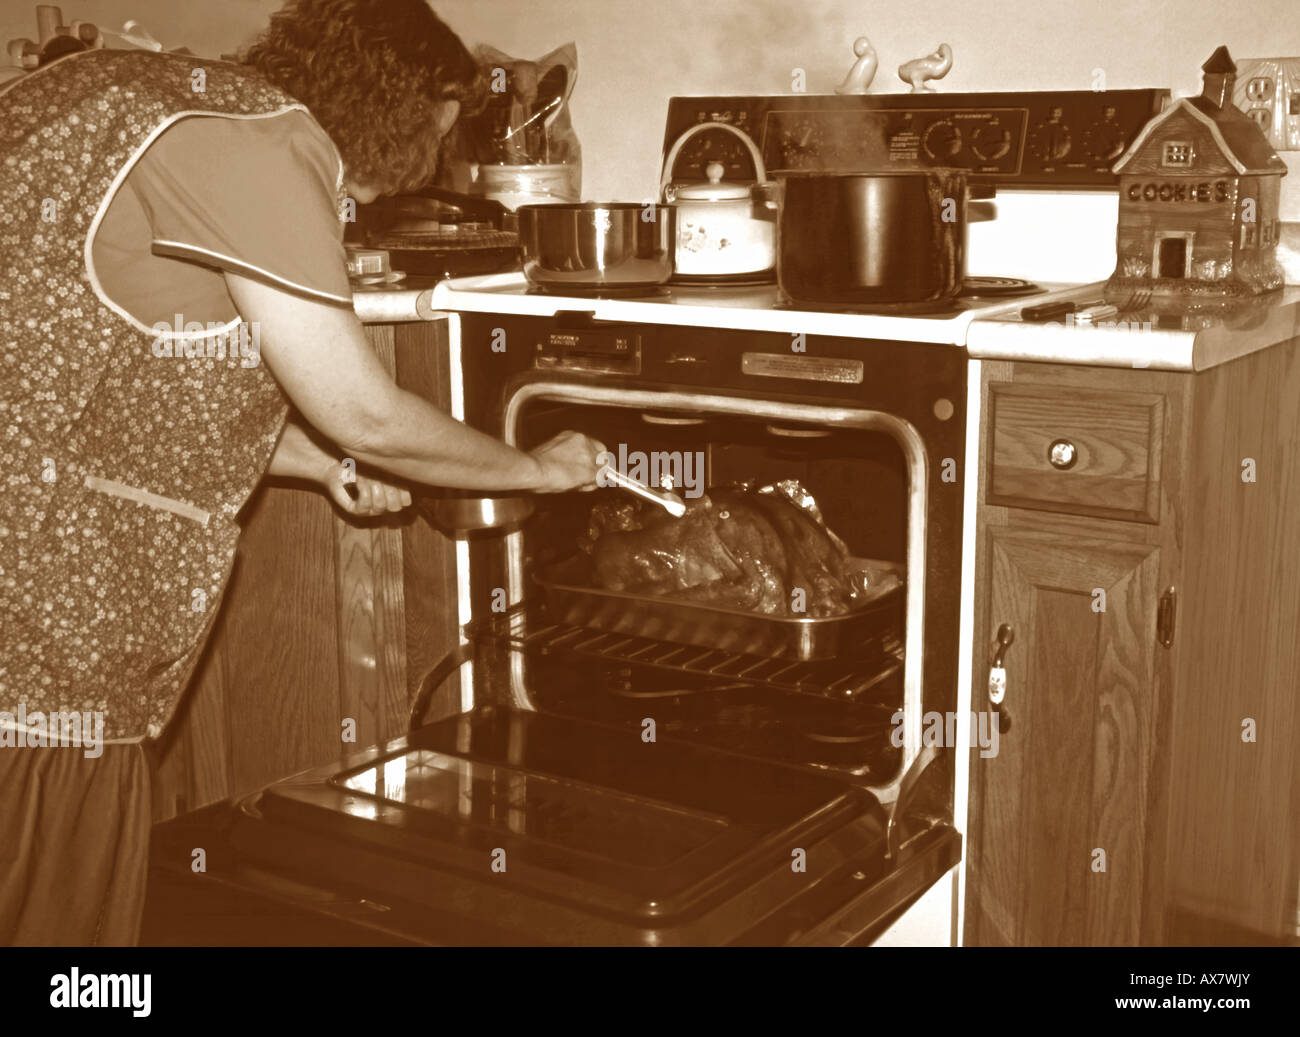 Homemaker basting a golden brown turkey, as she cooks dinner on Thanksgiving day for her family, that will soon arrive. Stock Photo